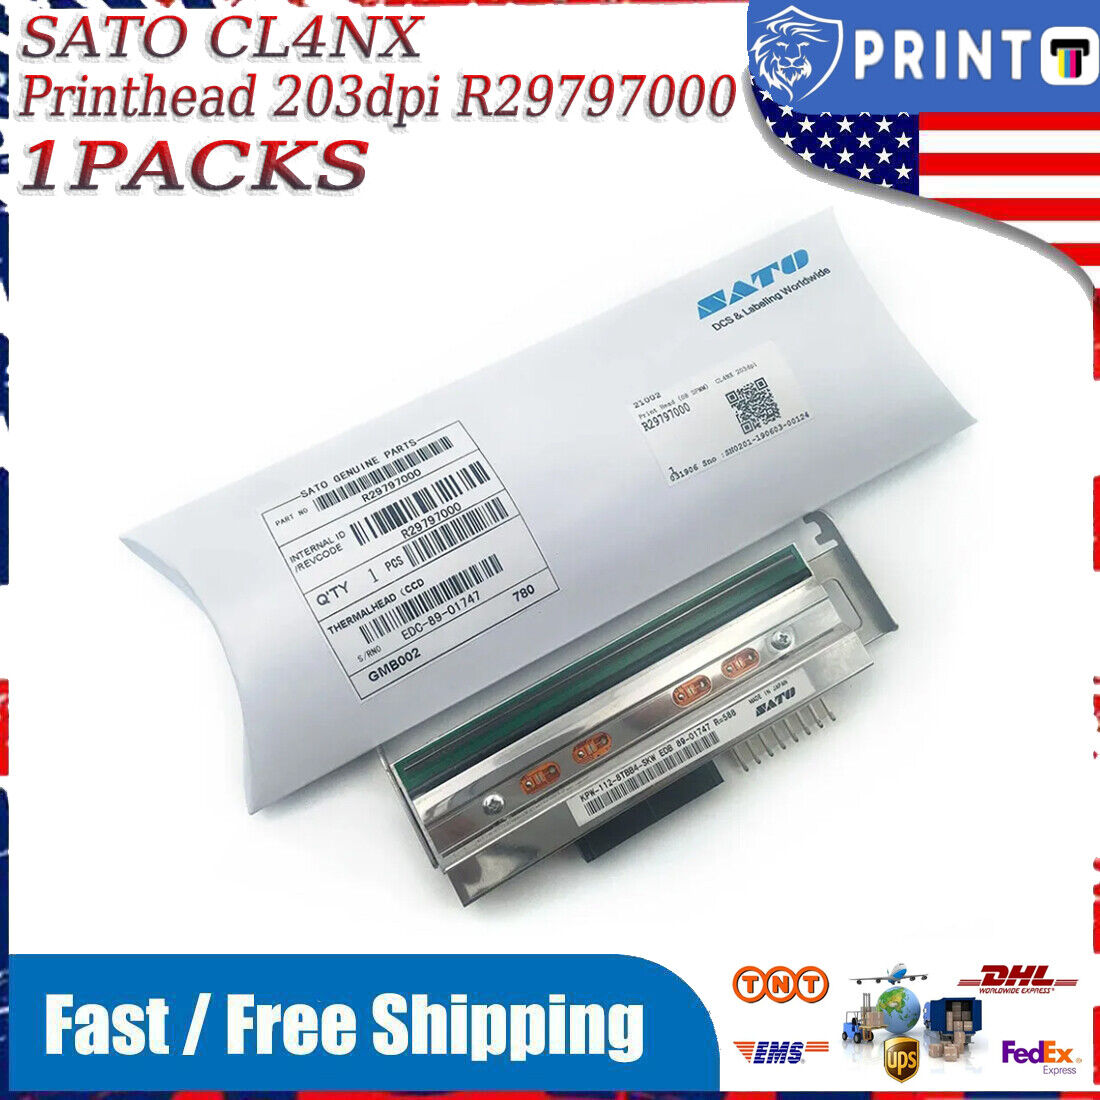 NEW R29797000 Original Printhead for SATO CL4NX Thermal Label Printer 203dpi